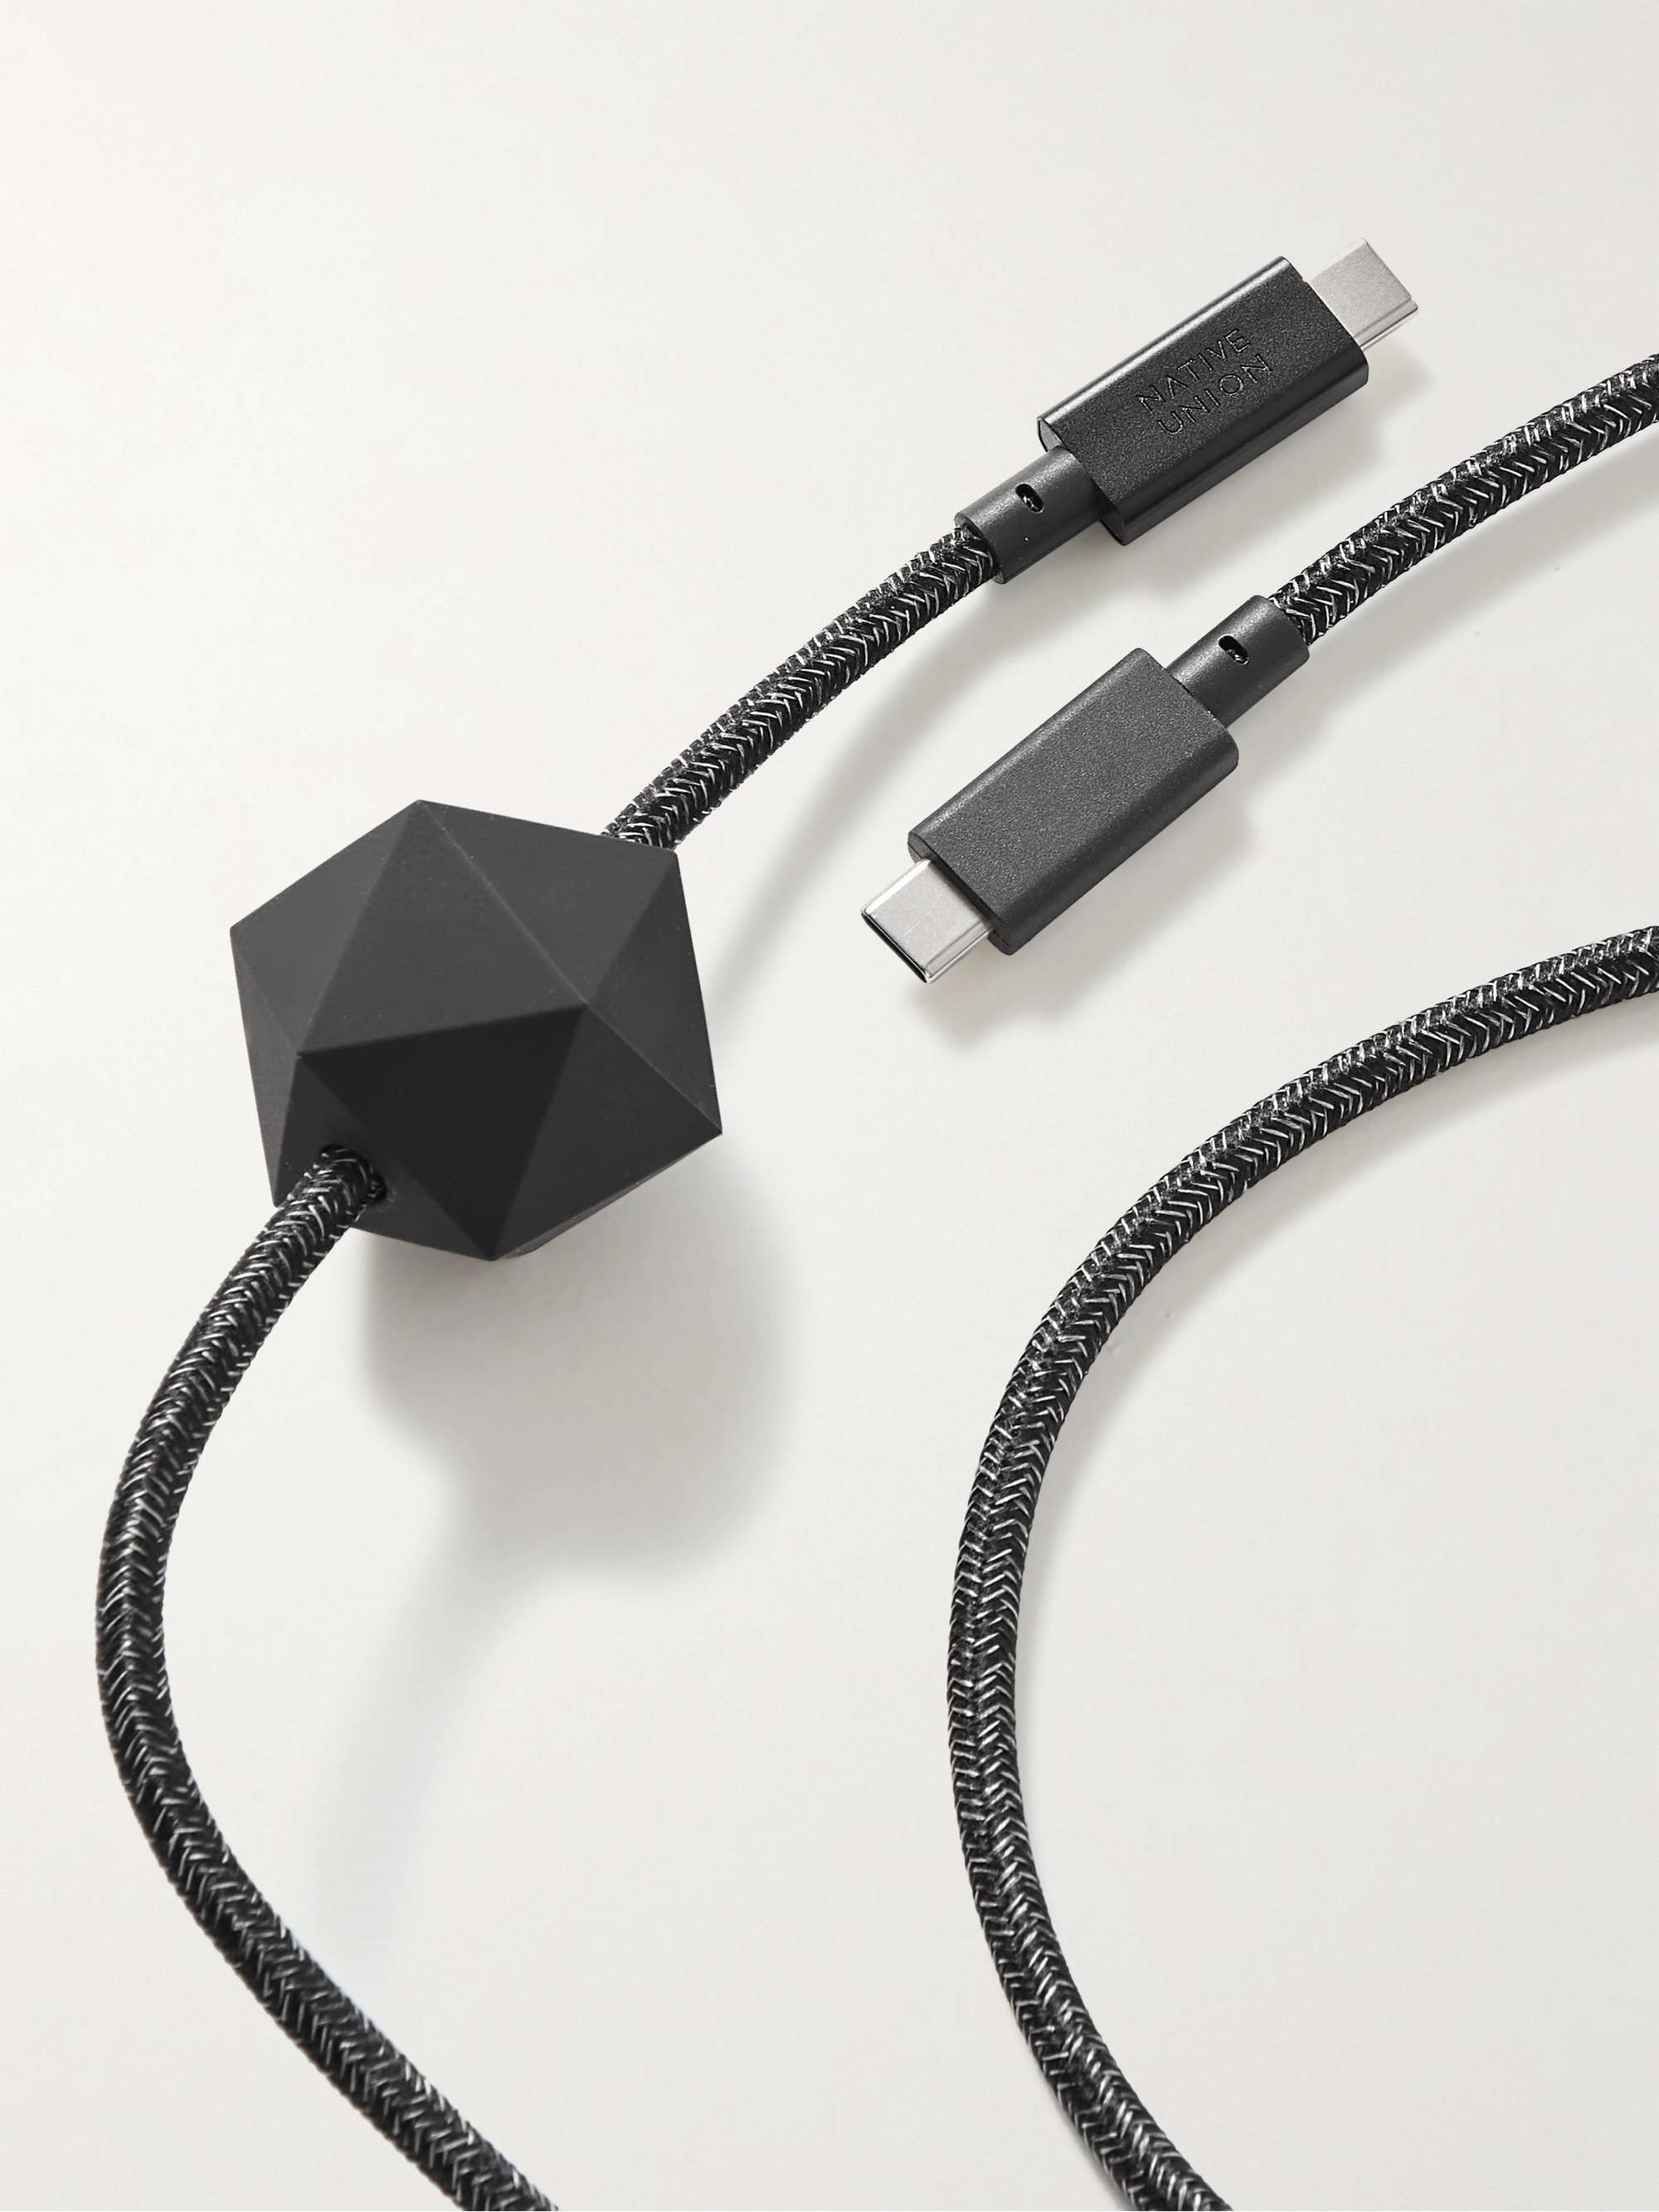 NATIVE UNION Desk USB-C Cable for Men | MR PORTER